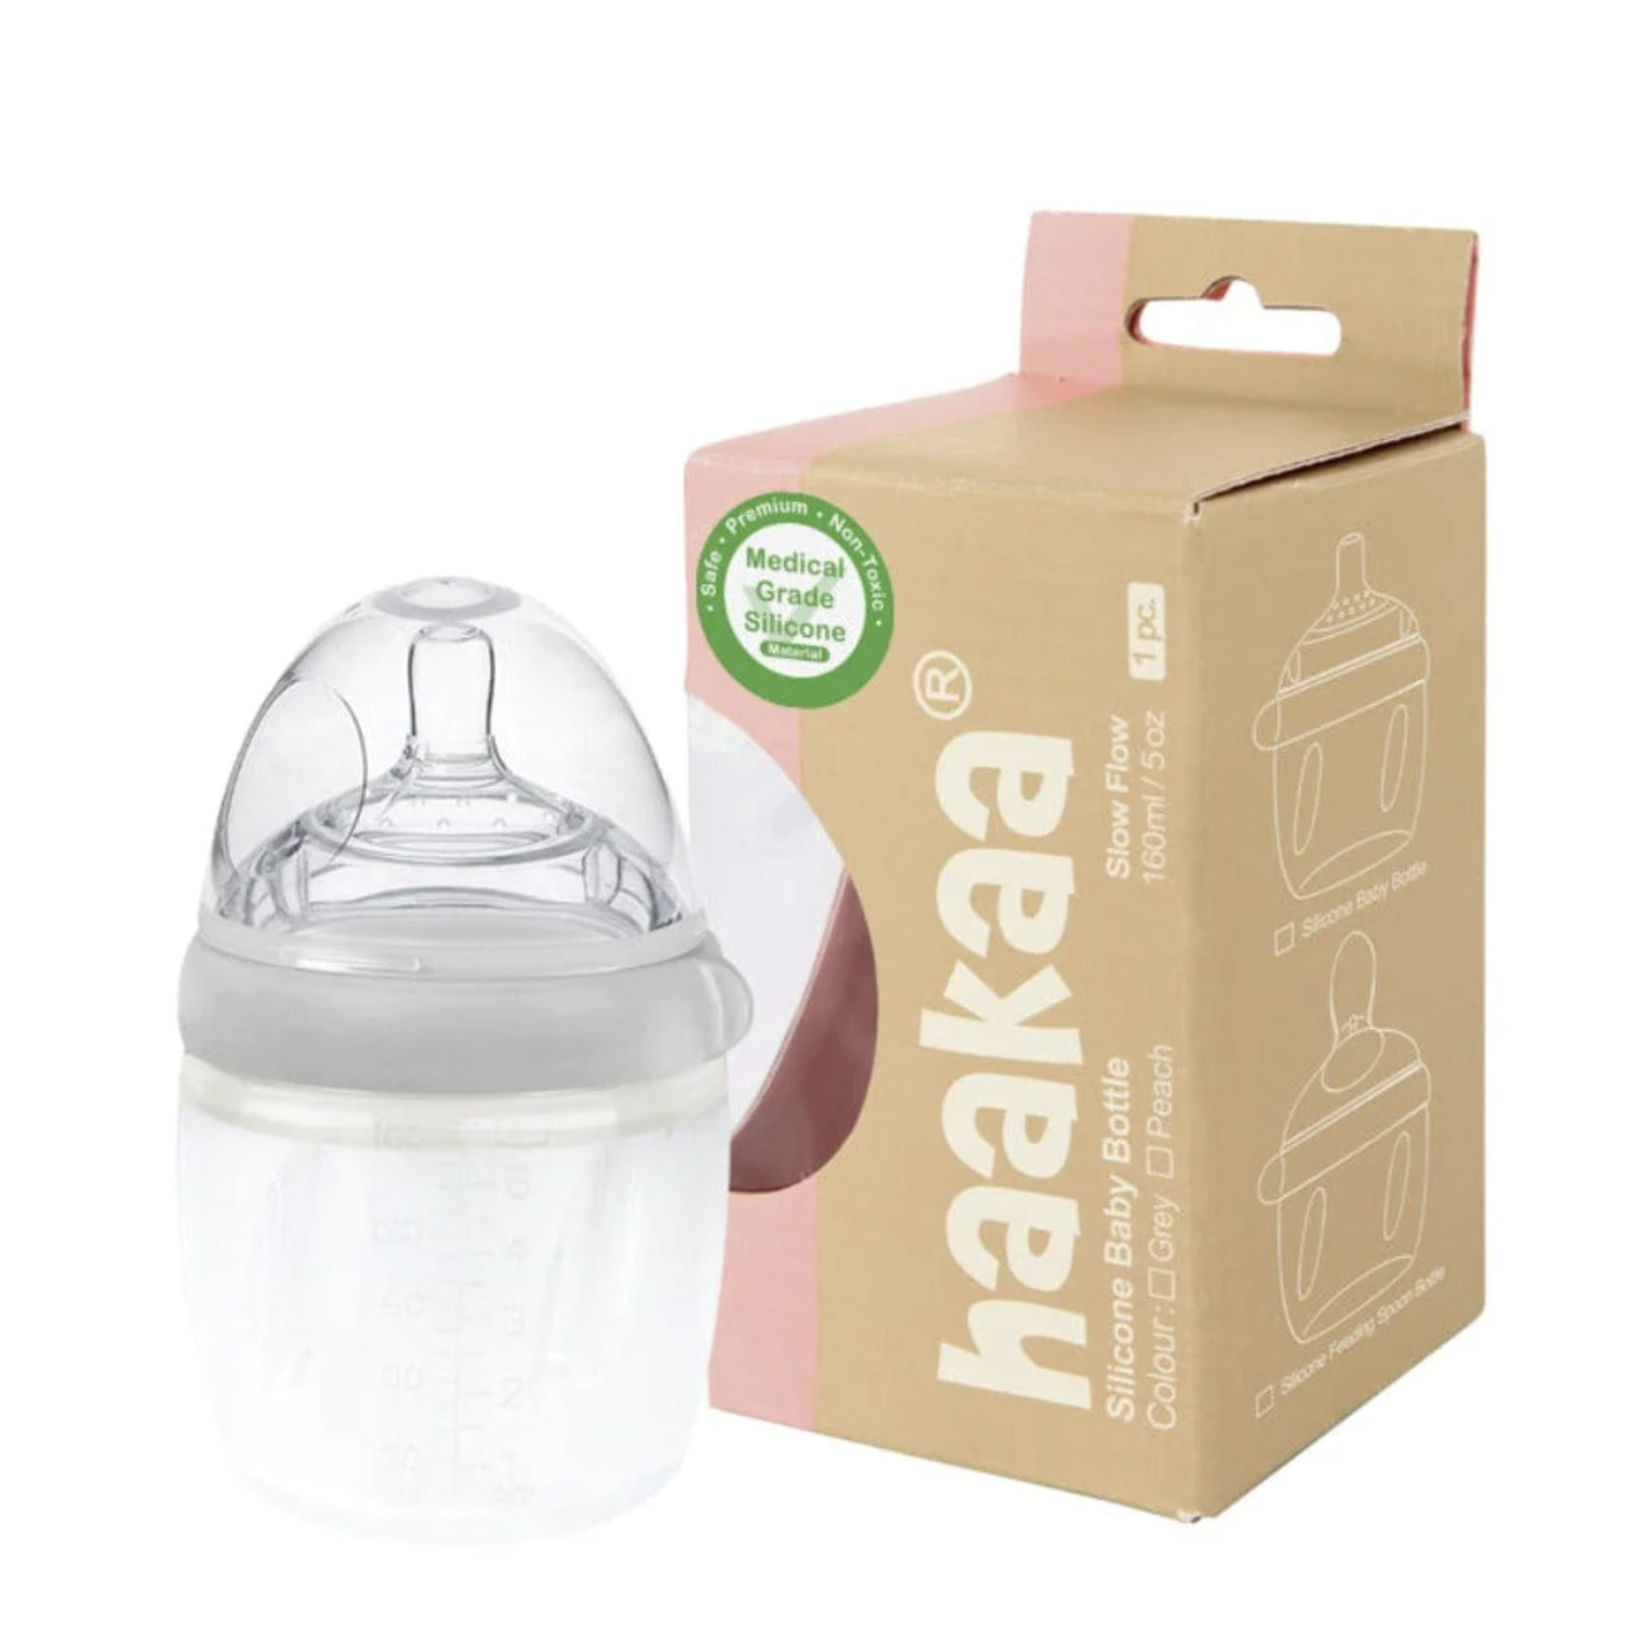 Haakaa Generation 3 Silicone Baby Bottle-Grey 160ml(slow teat)